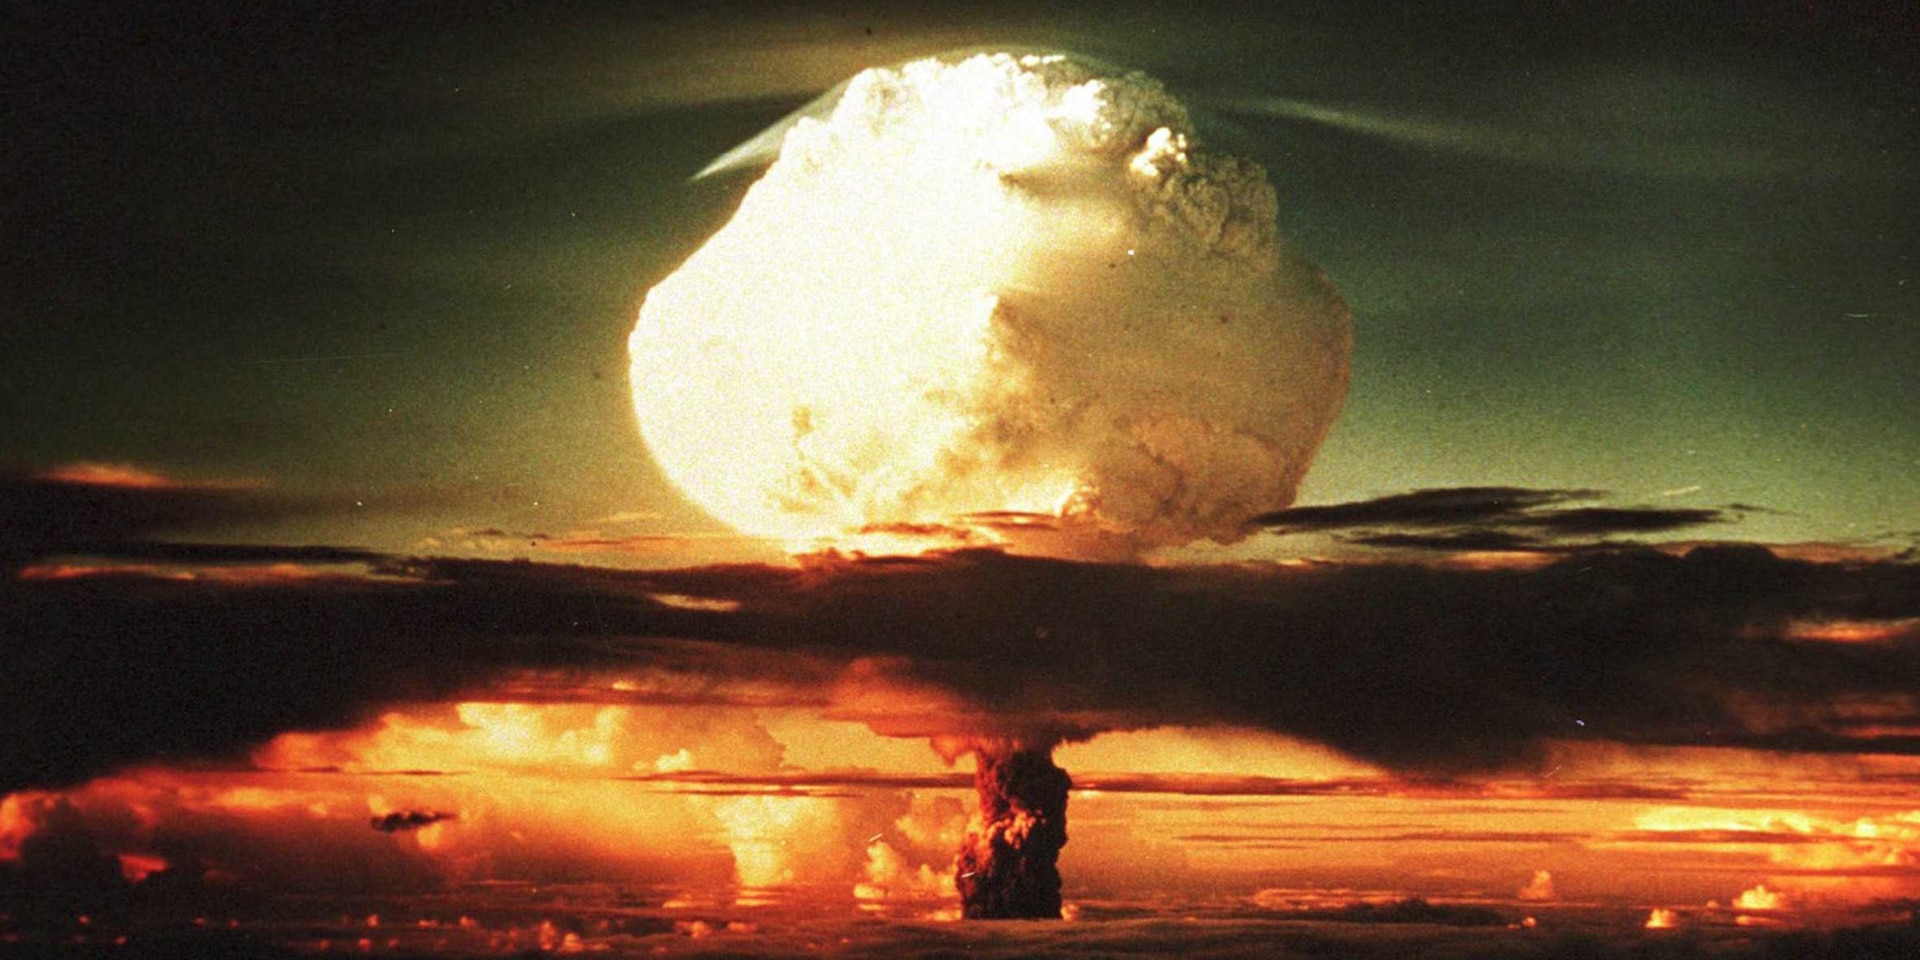 A mushroom cloud following detonation of a nuclear bomb rises into the sky.